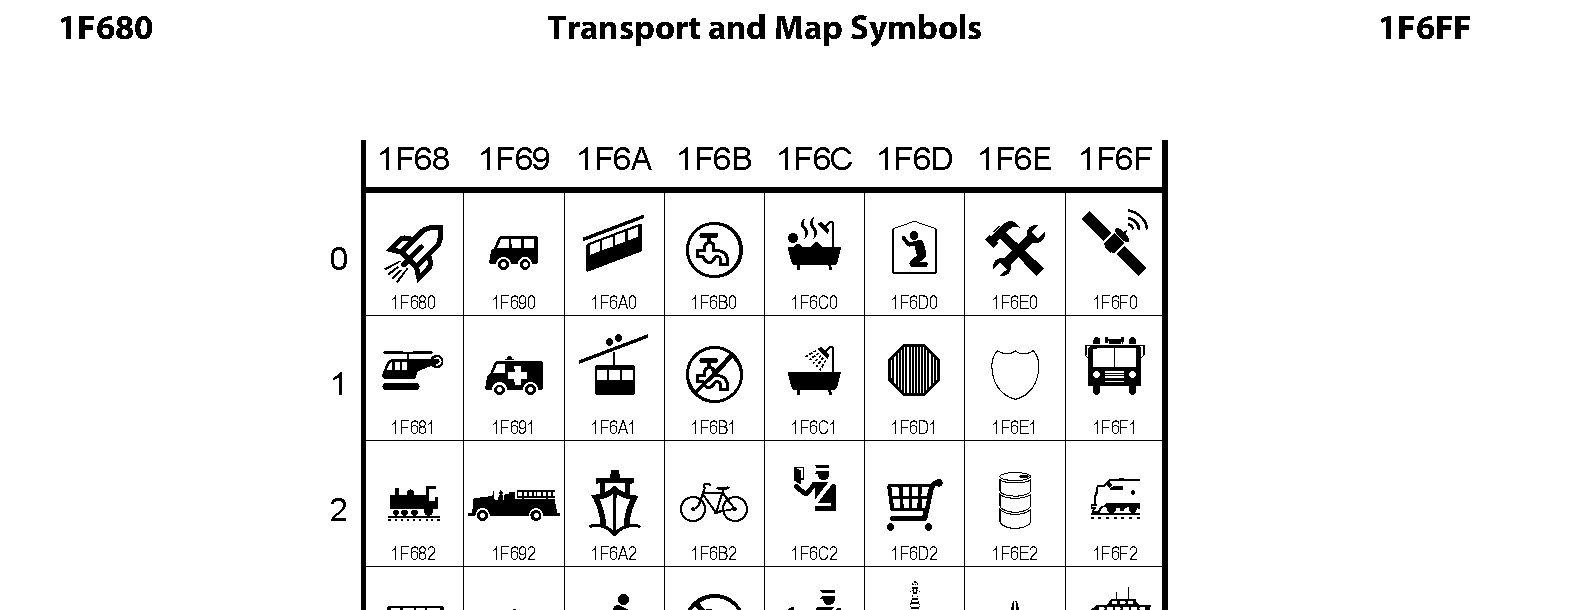 Unicode - Transport and Map Symbols